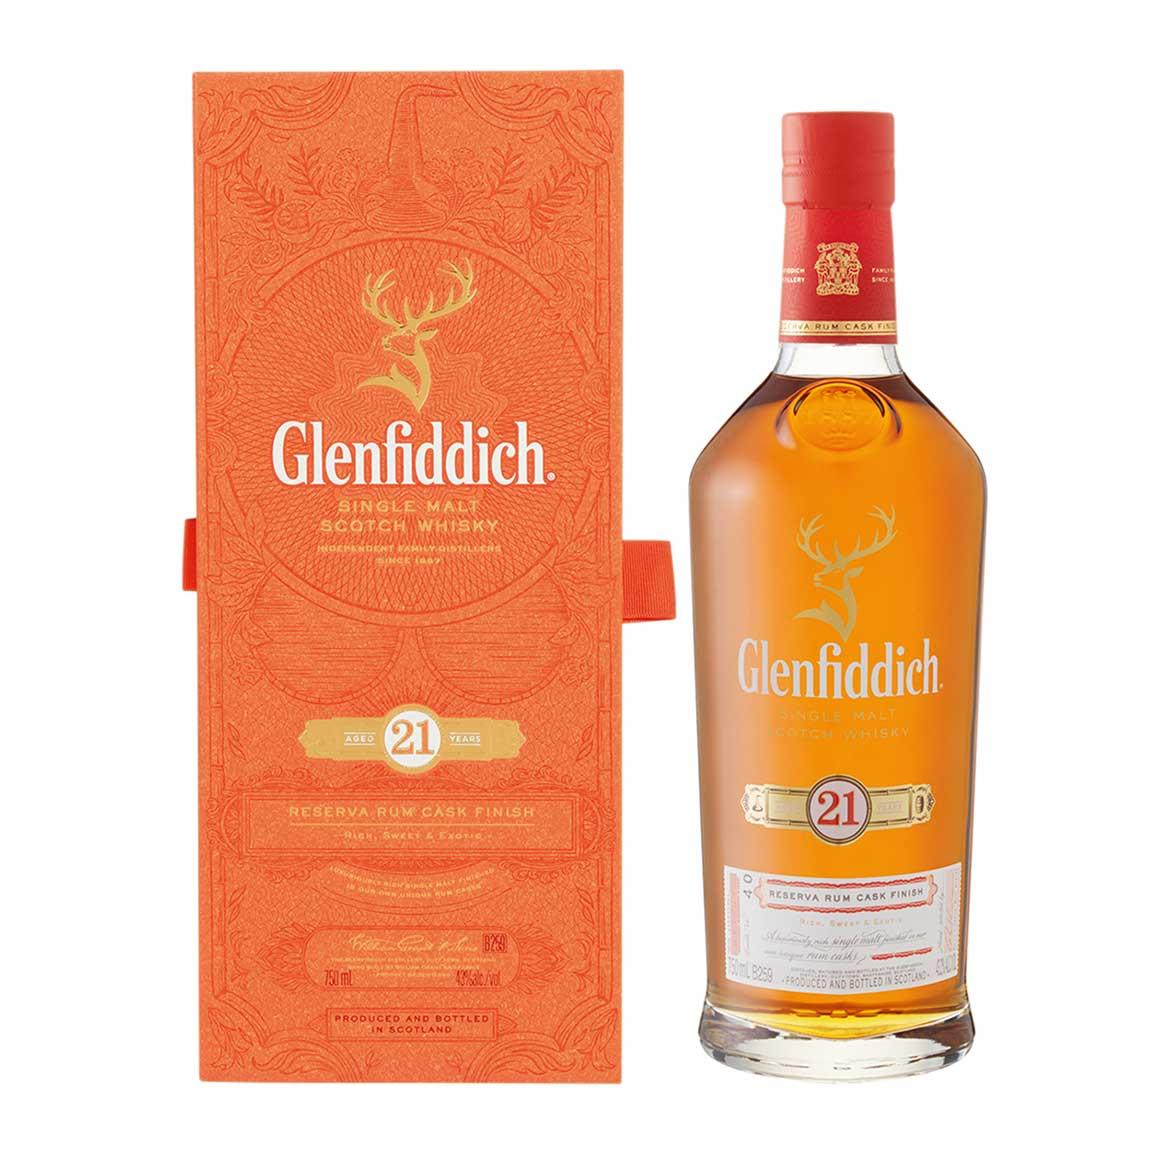 Glenfiddich 18 Year Old Single Malt Scotch Whisky 750 ml